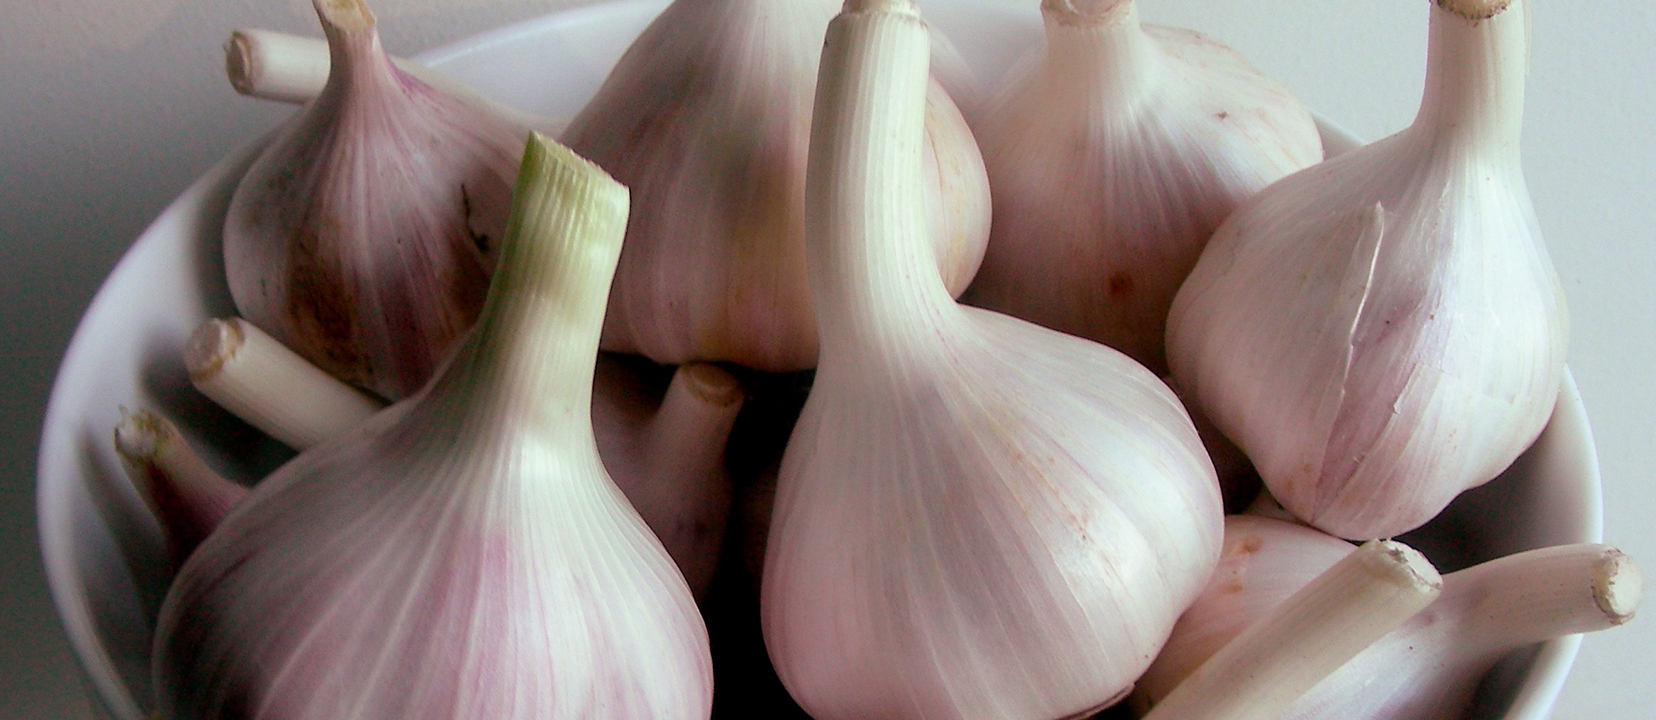 Eating Garlic and Raisins May Help Prevent Preterm Birth